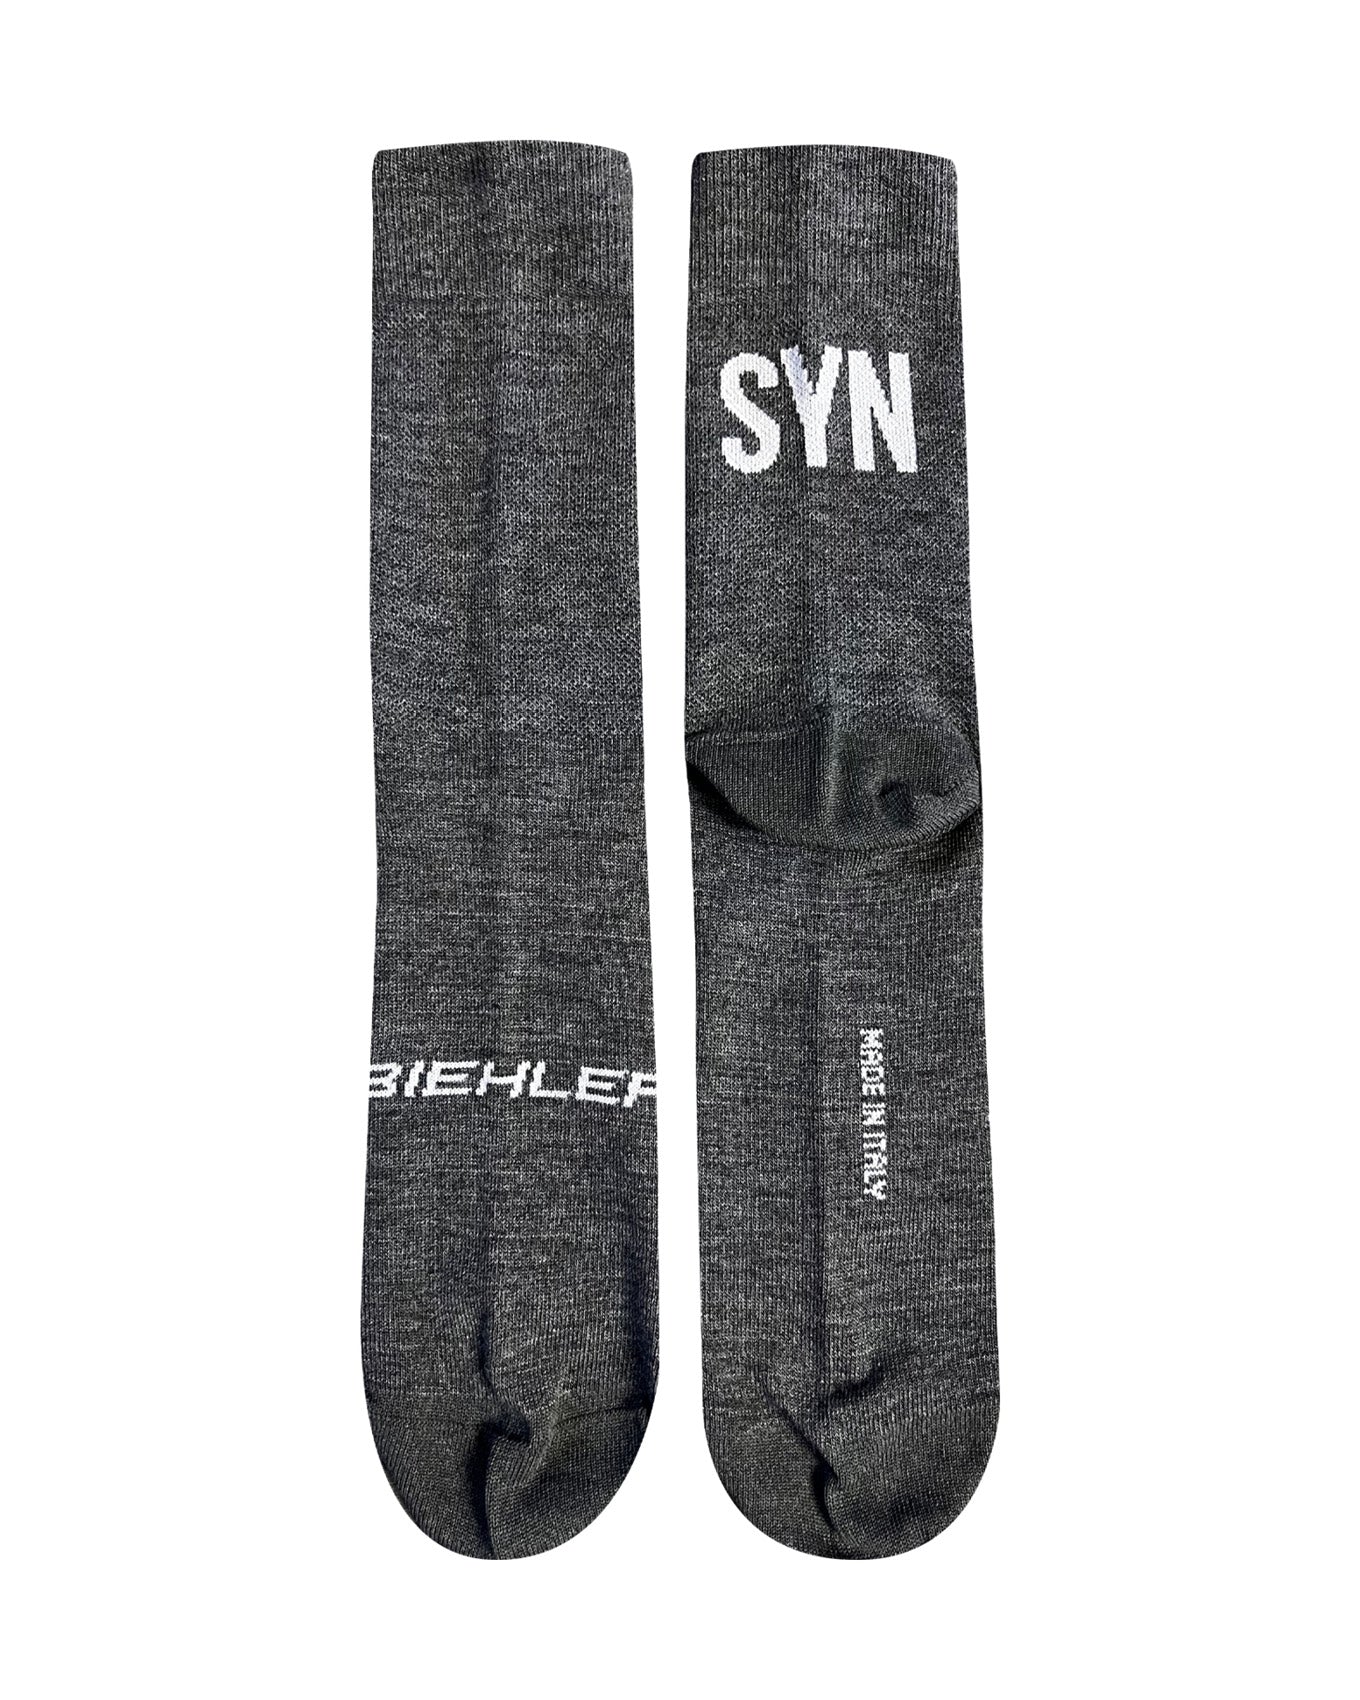 Syndicate Winter Socks